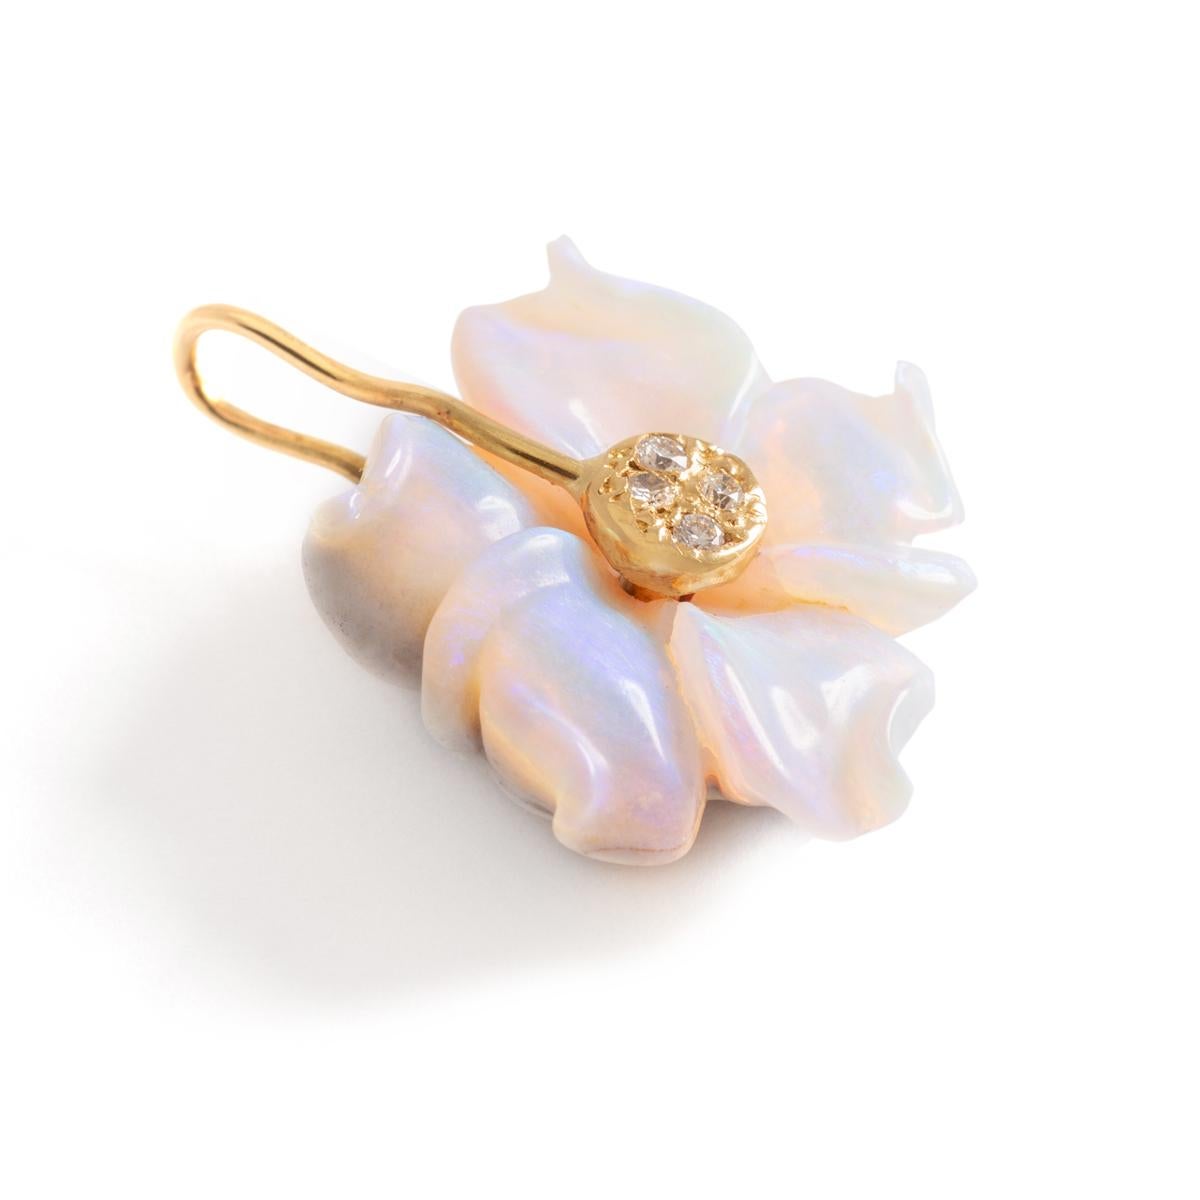 Opal Diamond Yellow Gold 18K Flower design Pendant.
Total length: 3.00 centimeters.
Gross weight: 3.54 grams.
